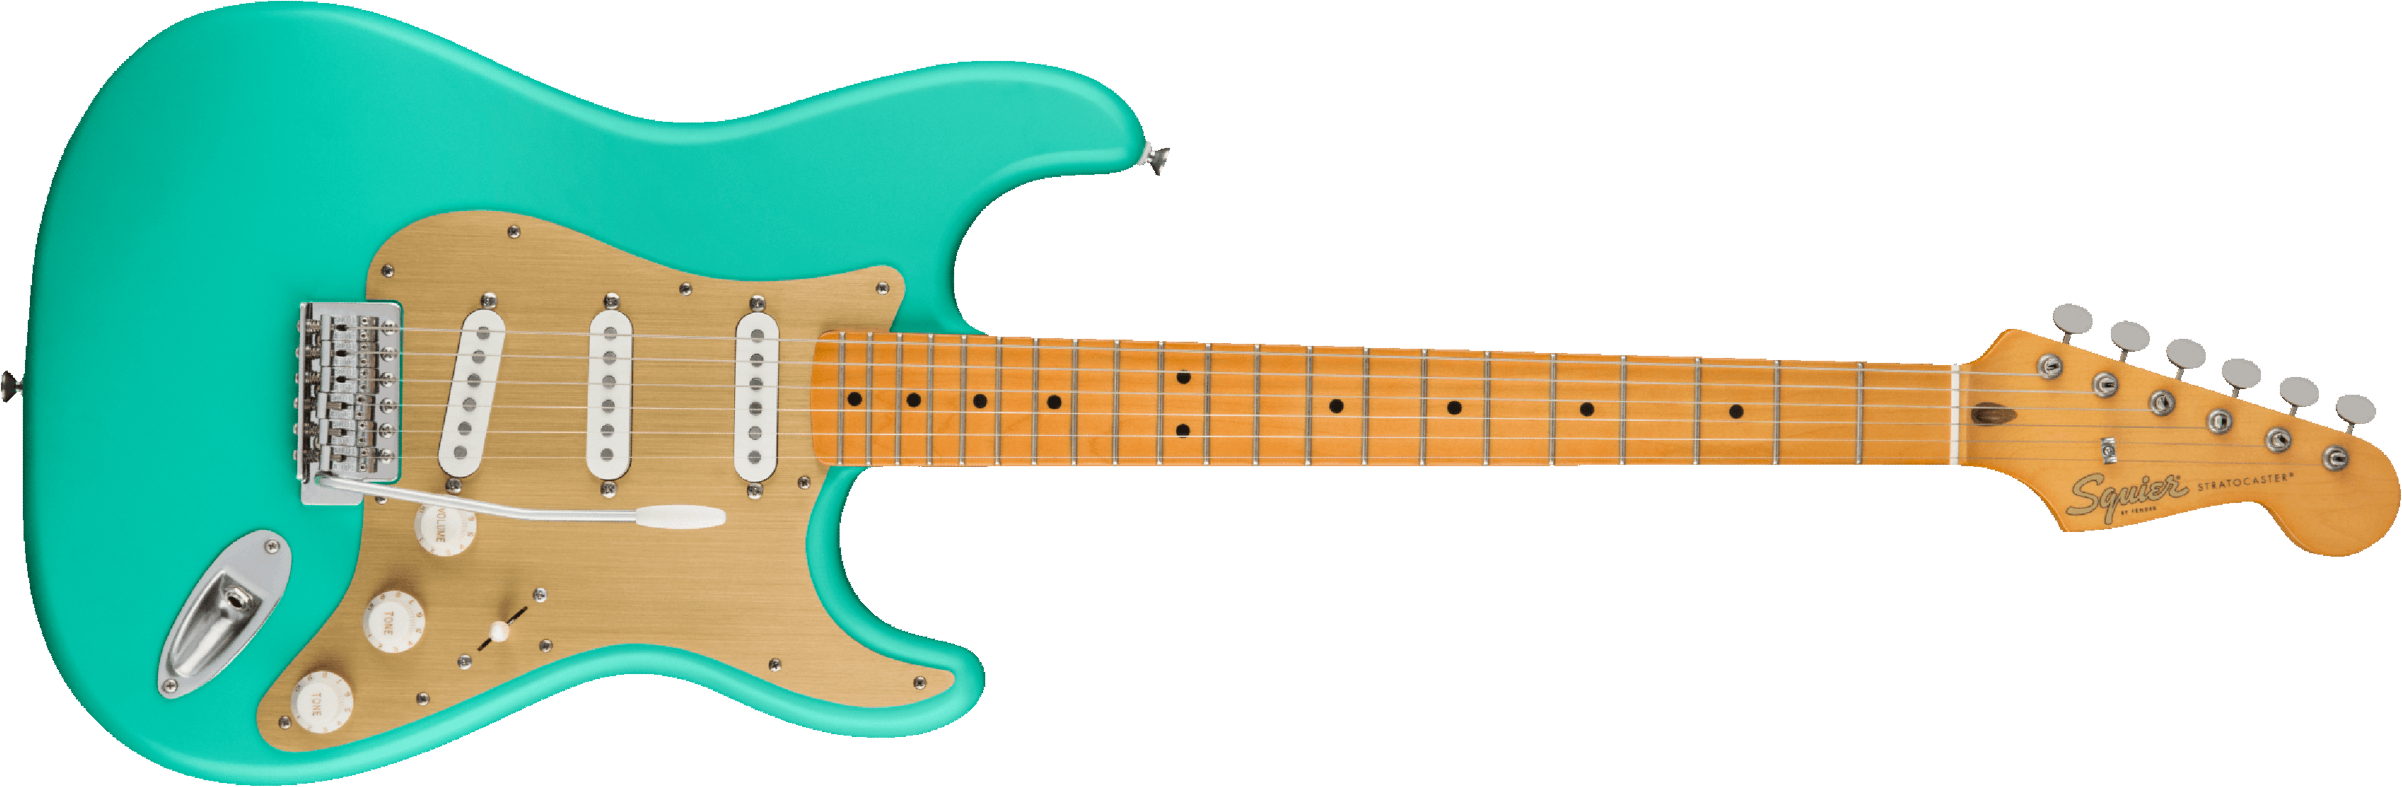 Squier Strat 40th Anniversary Vintage Edition Mn - Satin Seafoam Green - Str shape electric guitar - Main picture